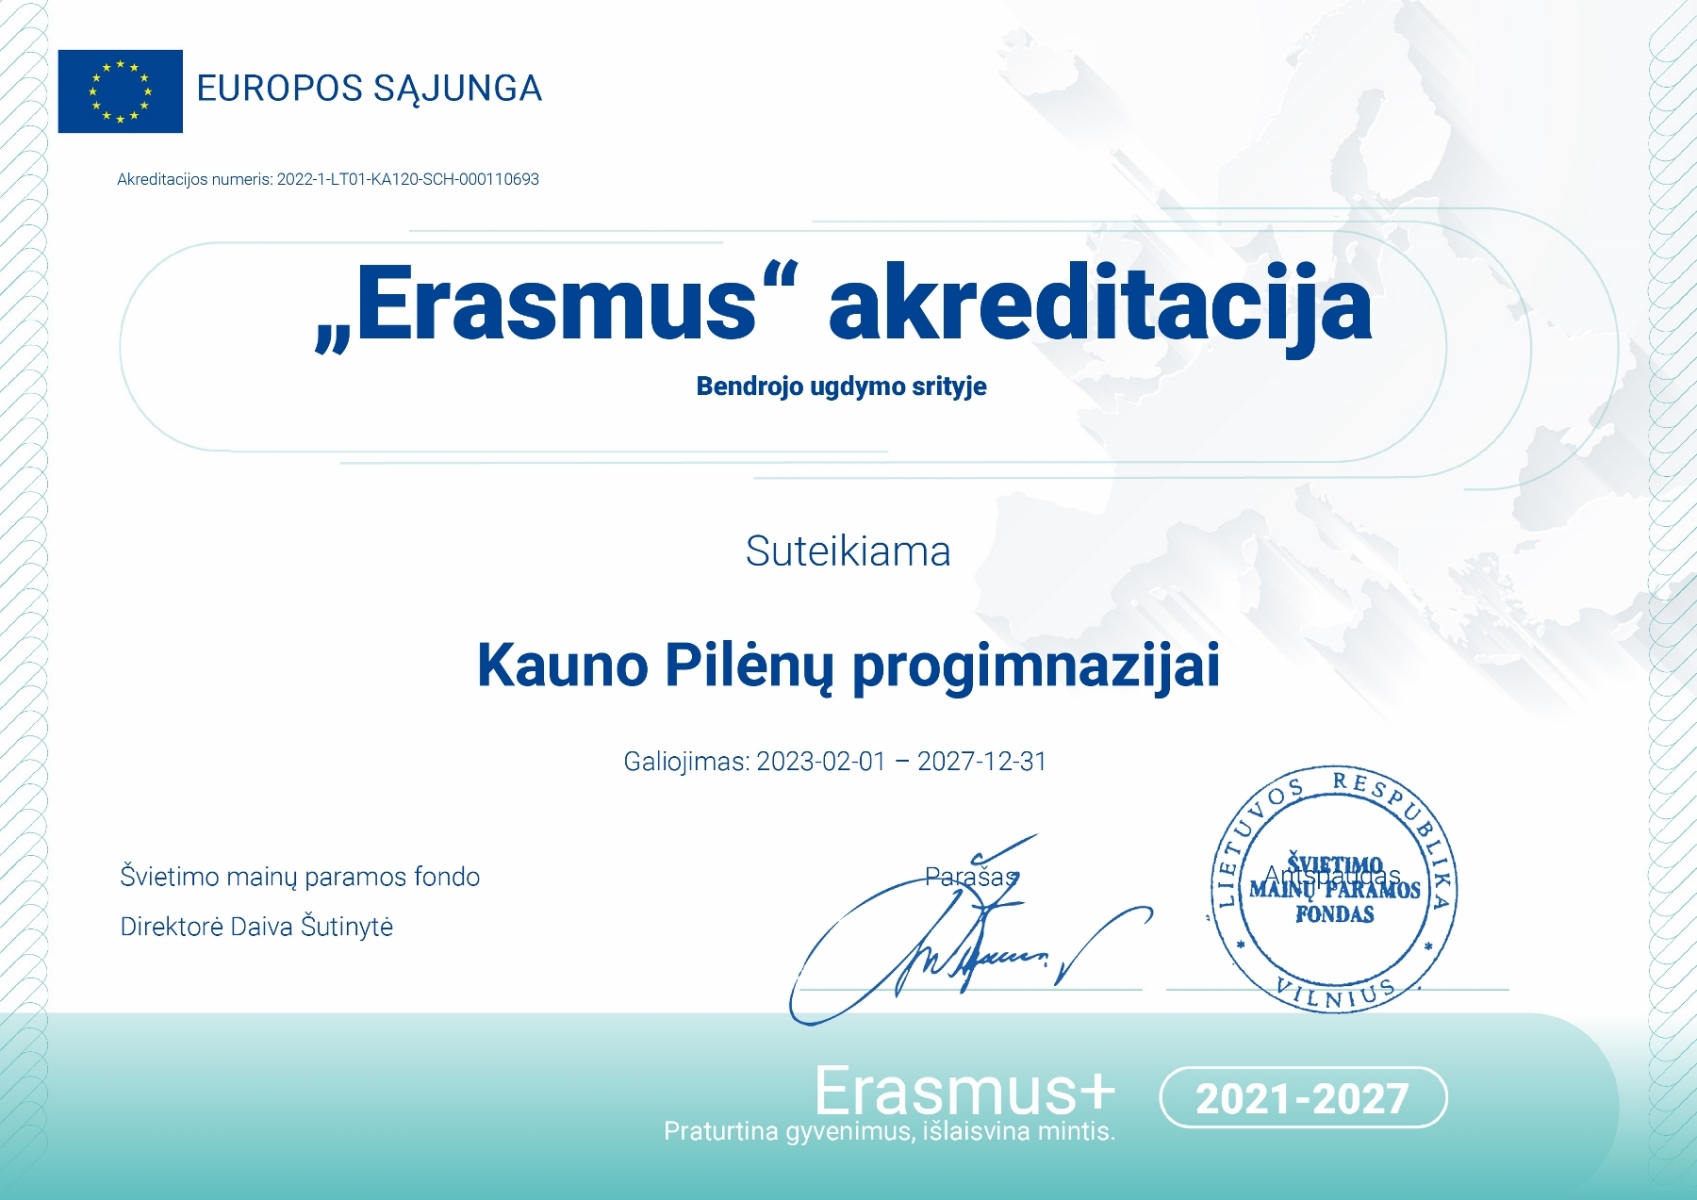 Erasmus akredituota